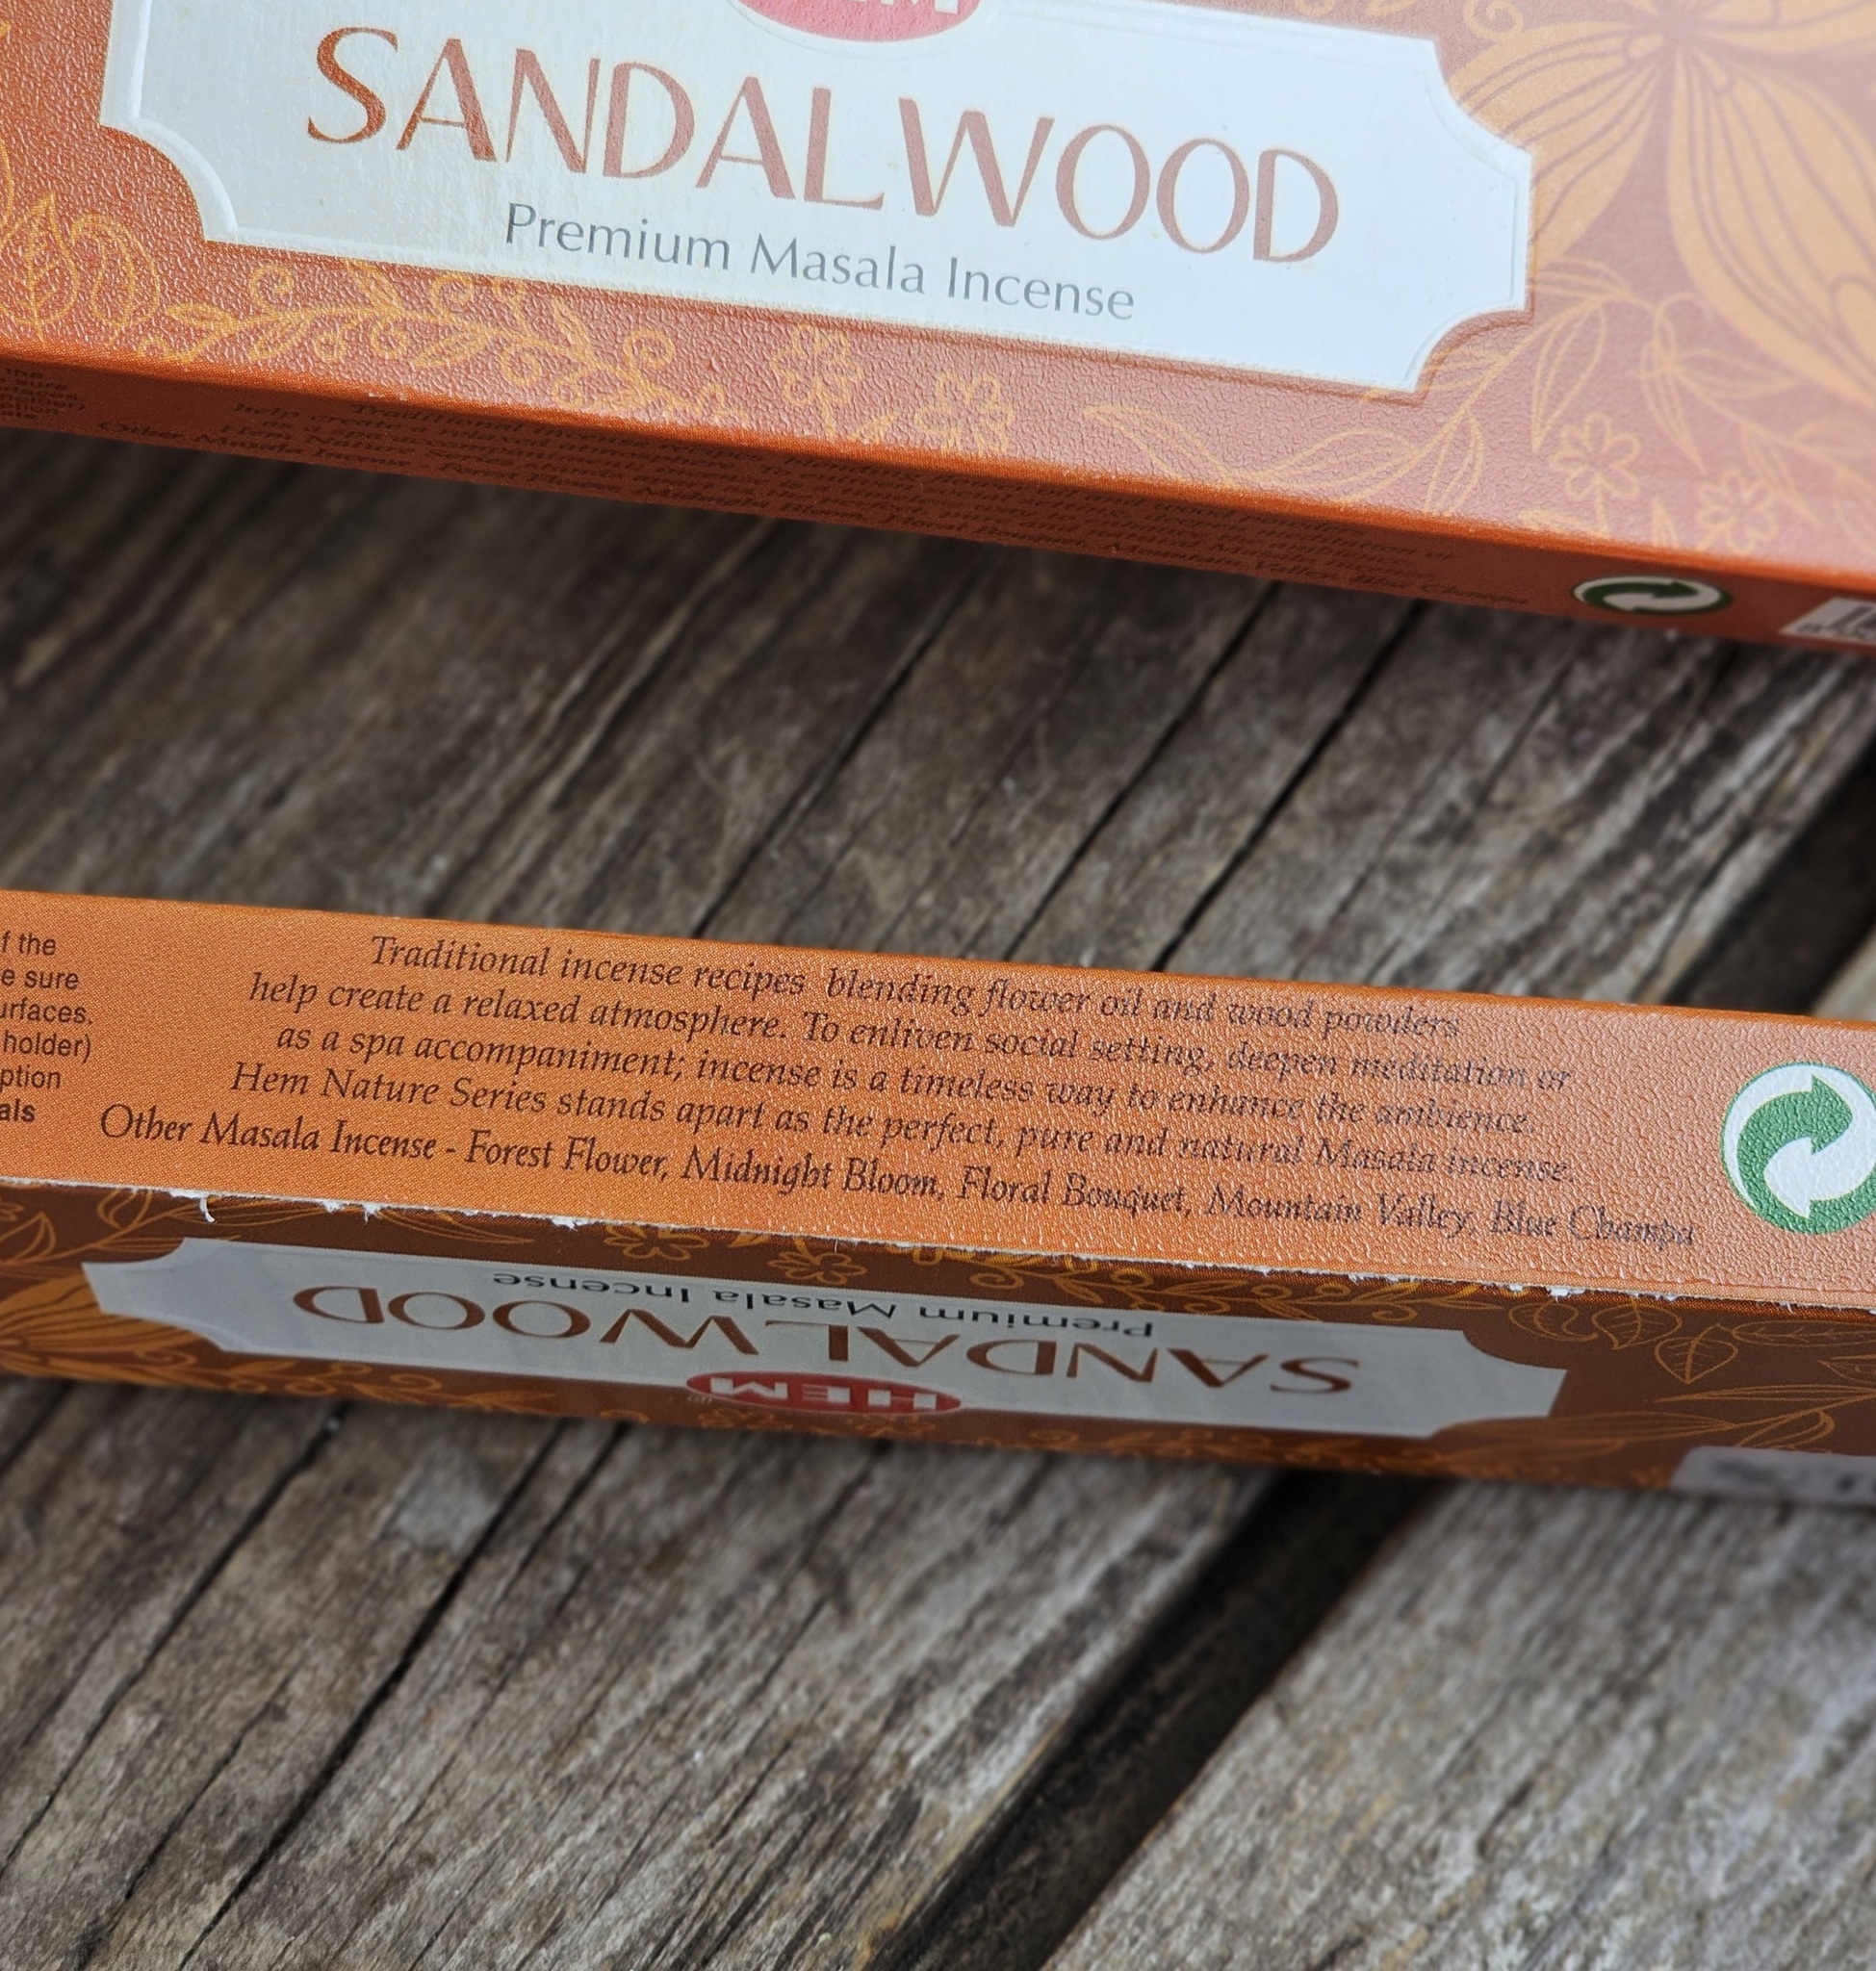 HEM - Sandalwood Premium Masala Incense, rökelsepinnar